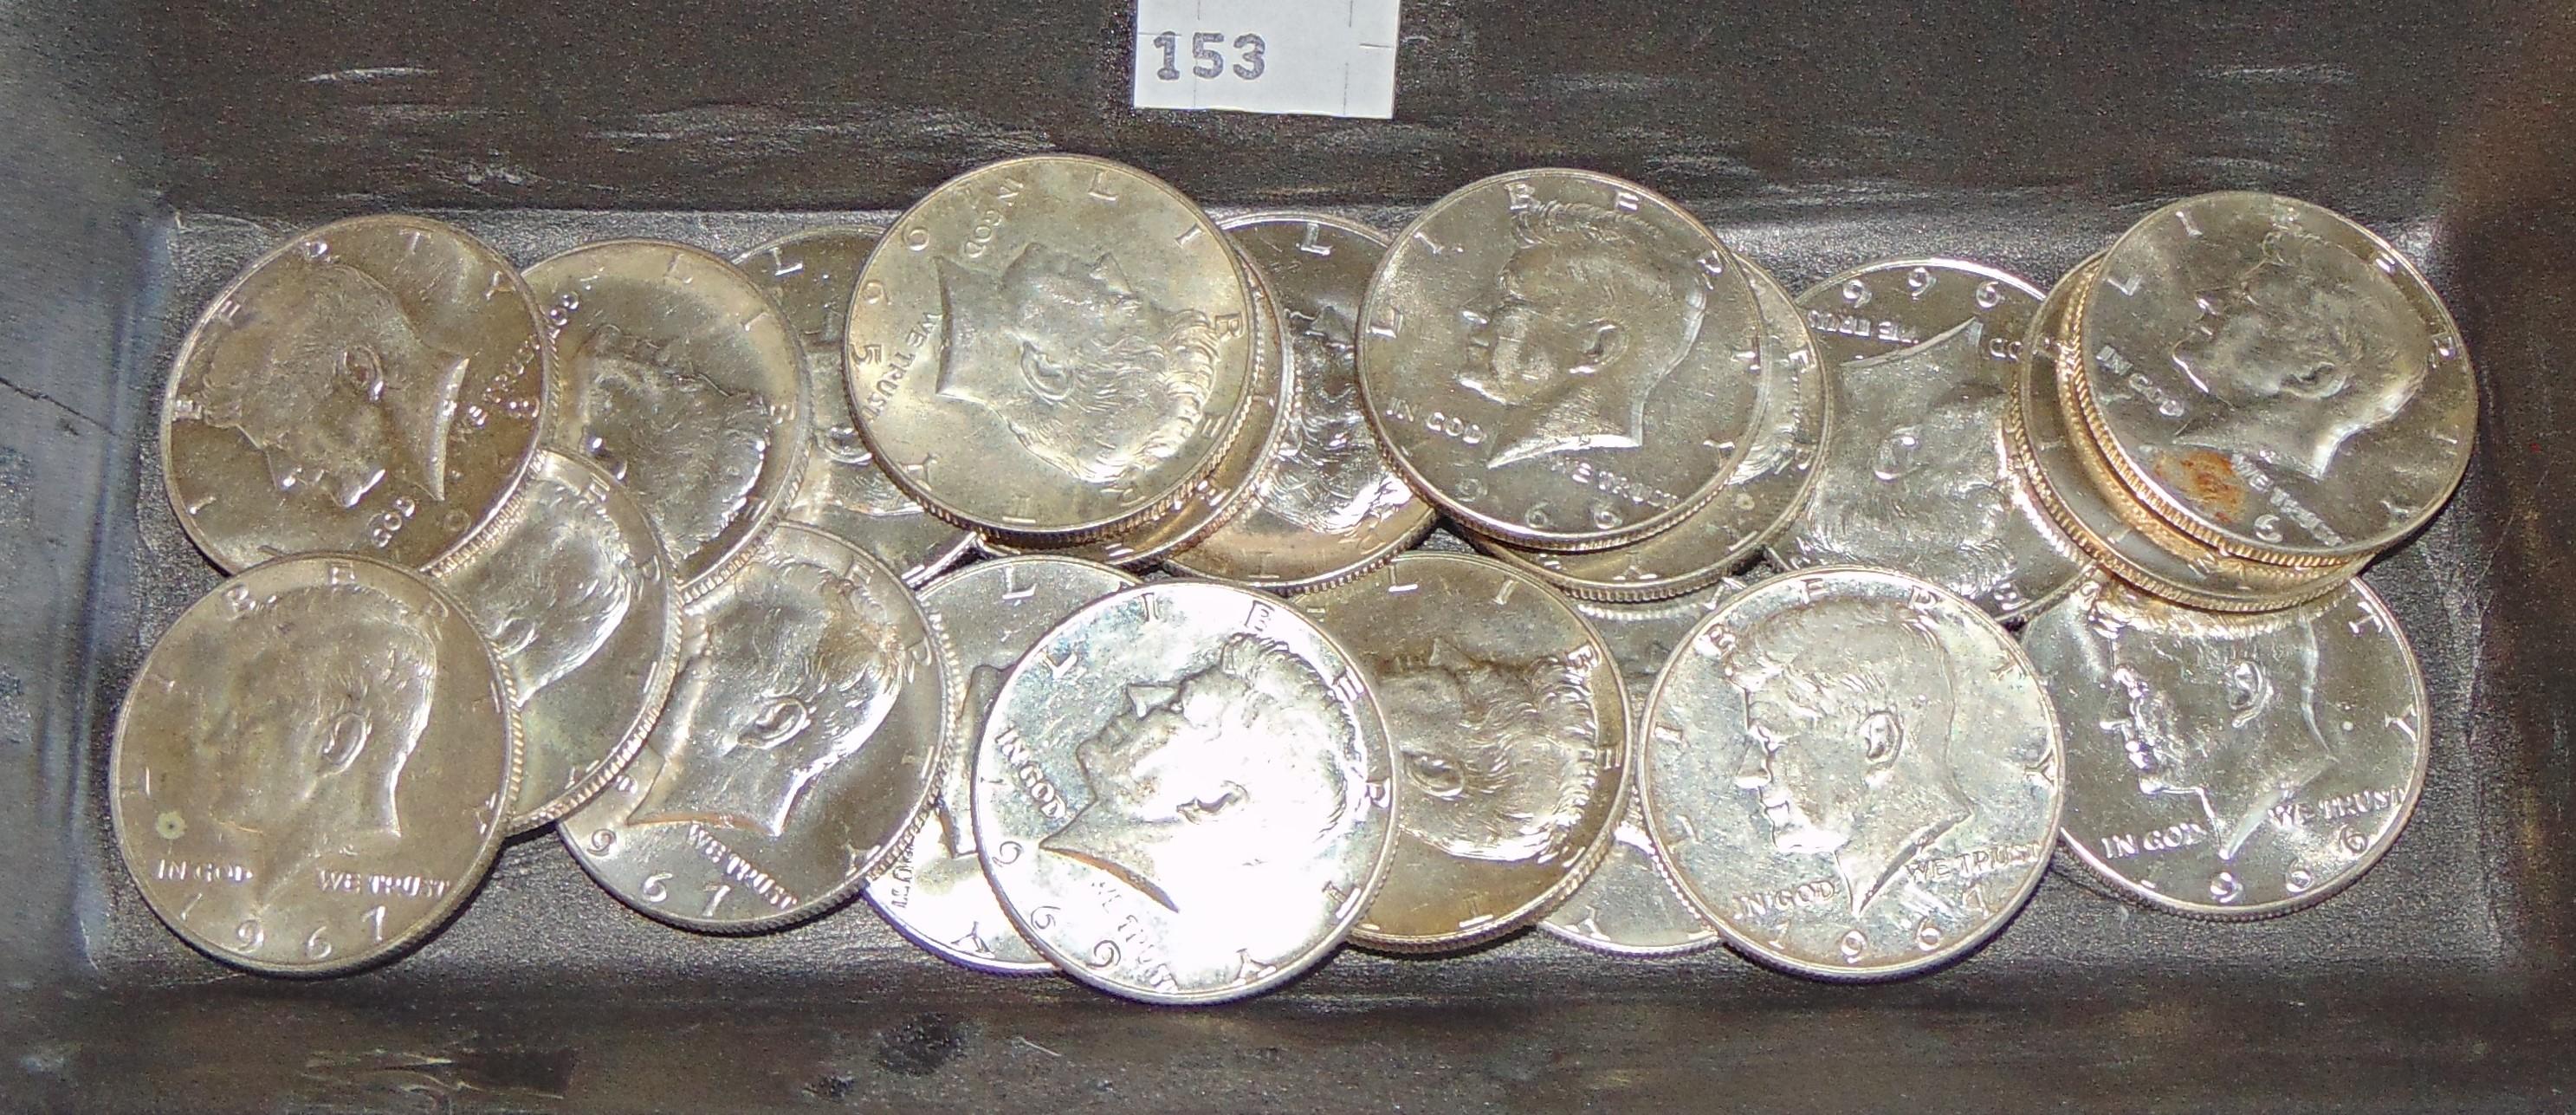 $10 face value 40% Silver Kennedy Half Dollars: